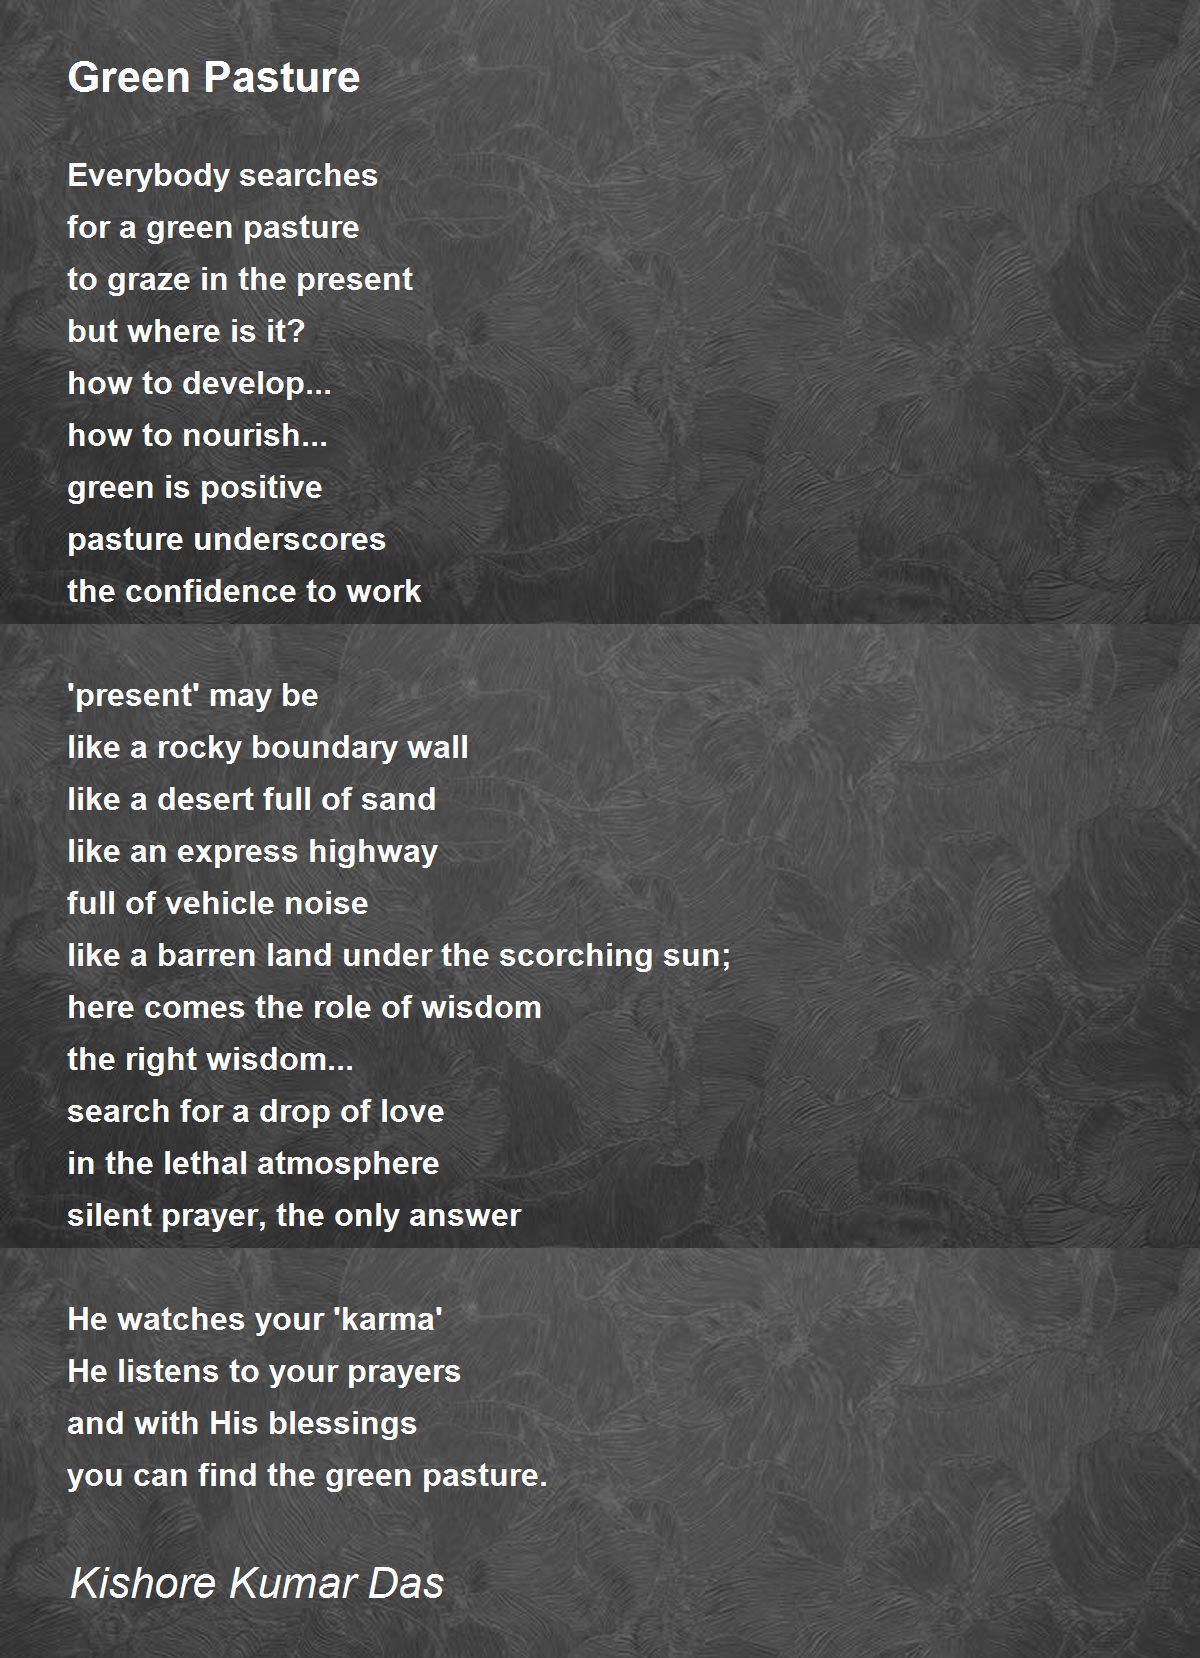 Green Pasture - Green Pasture Poem by Kishore Kumar Das